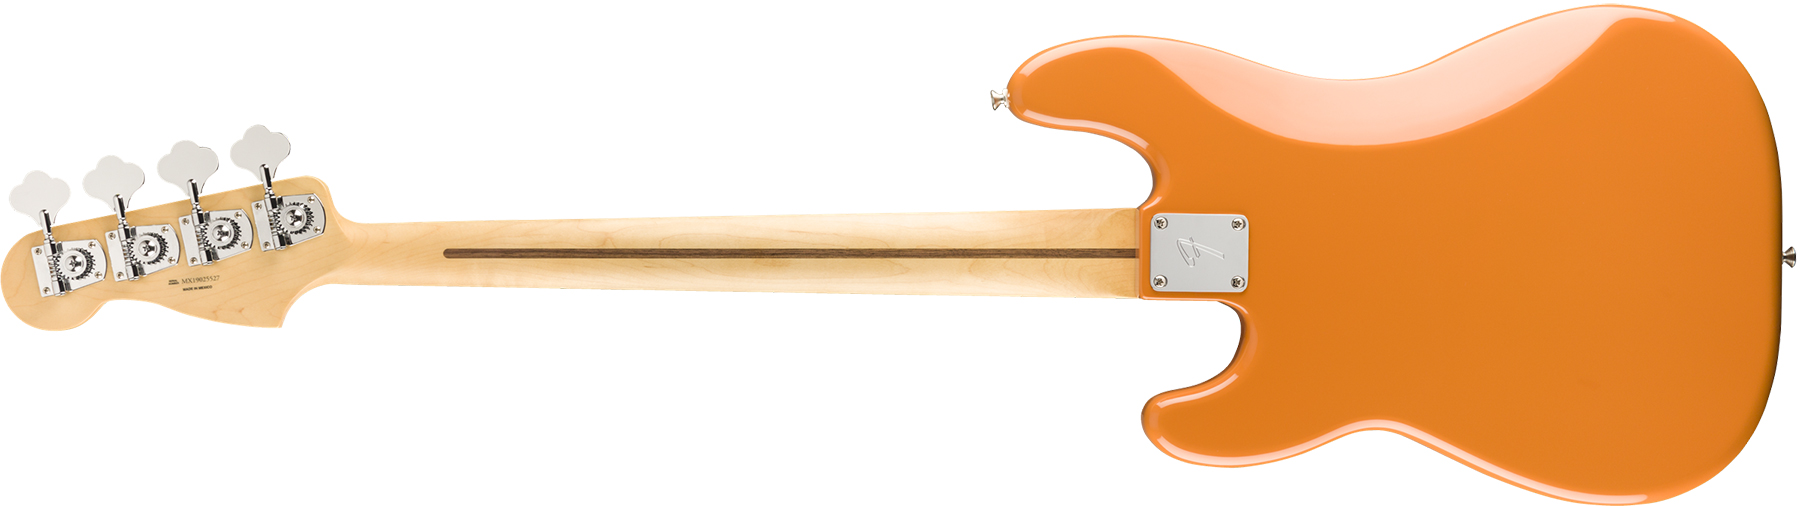 Fender Precision Bass Player Mex Pf - Capri Orange - Solid body electric bass - Variation 1